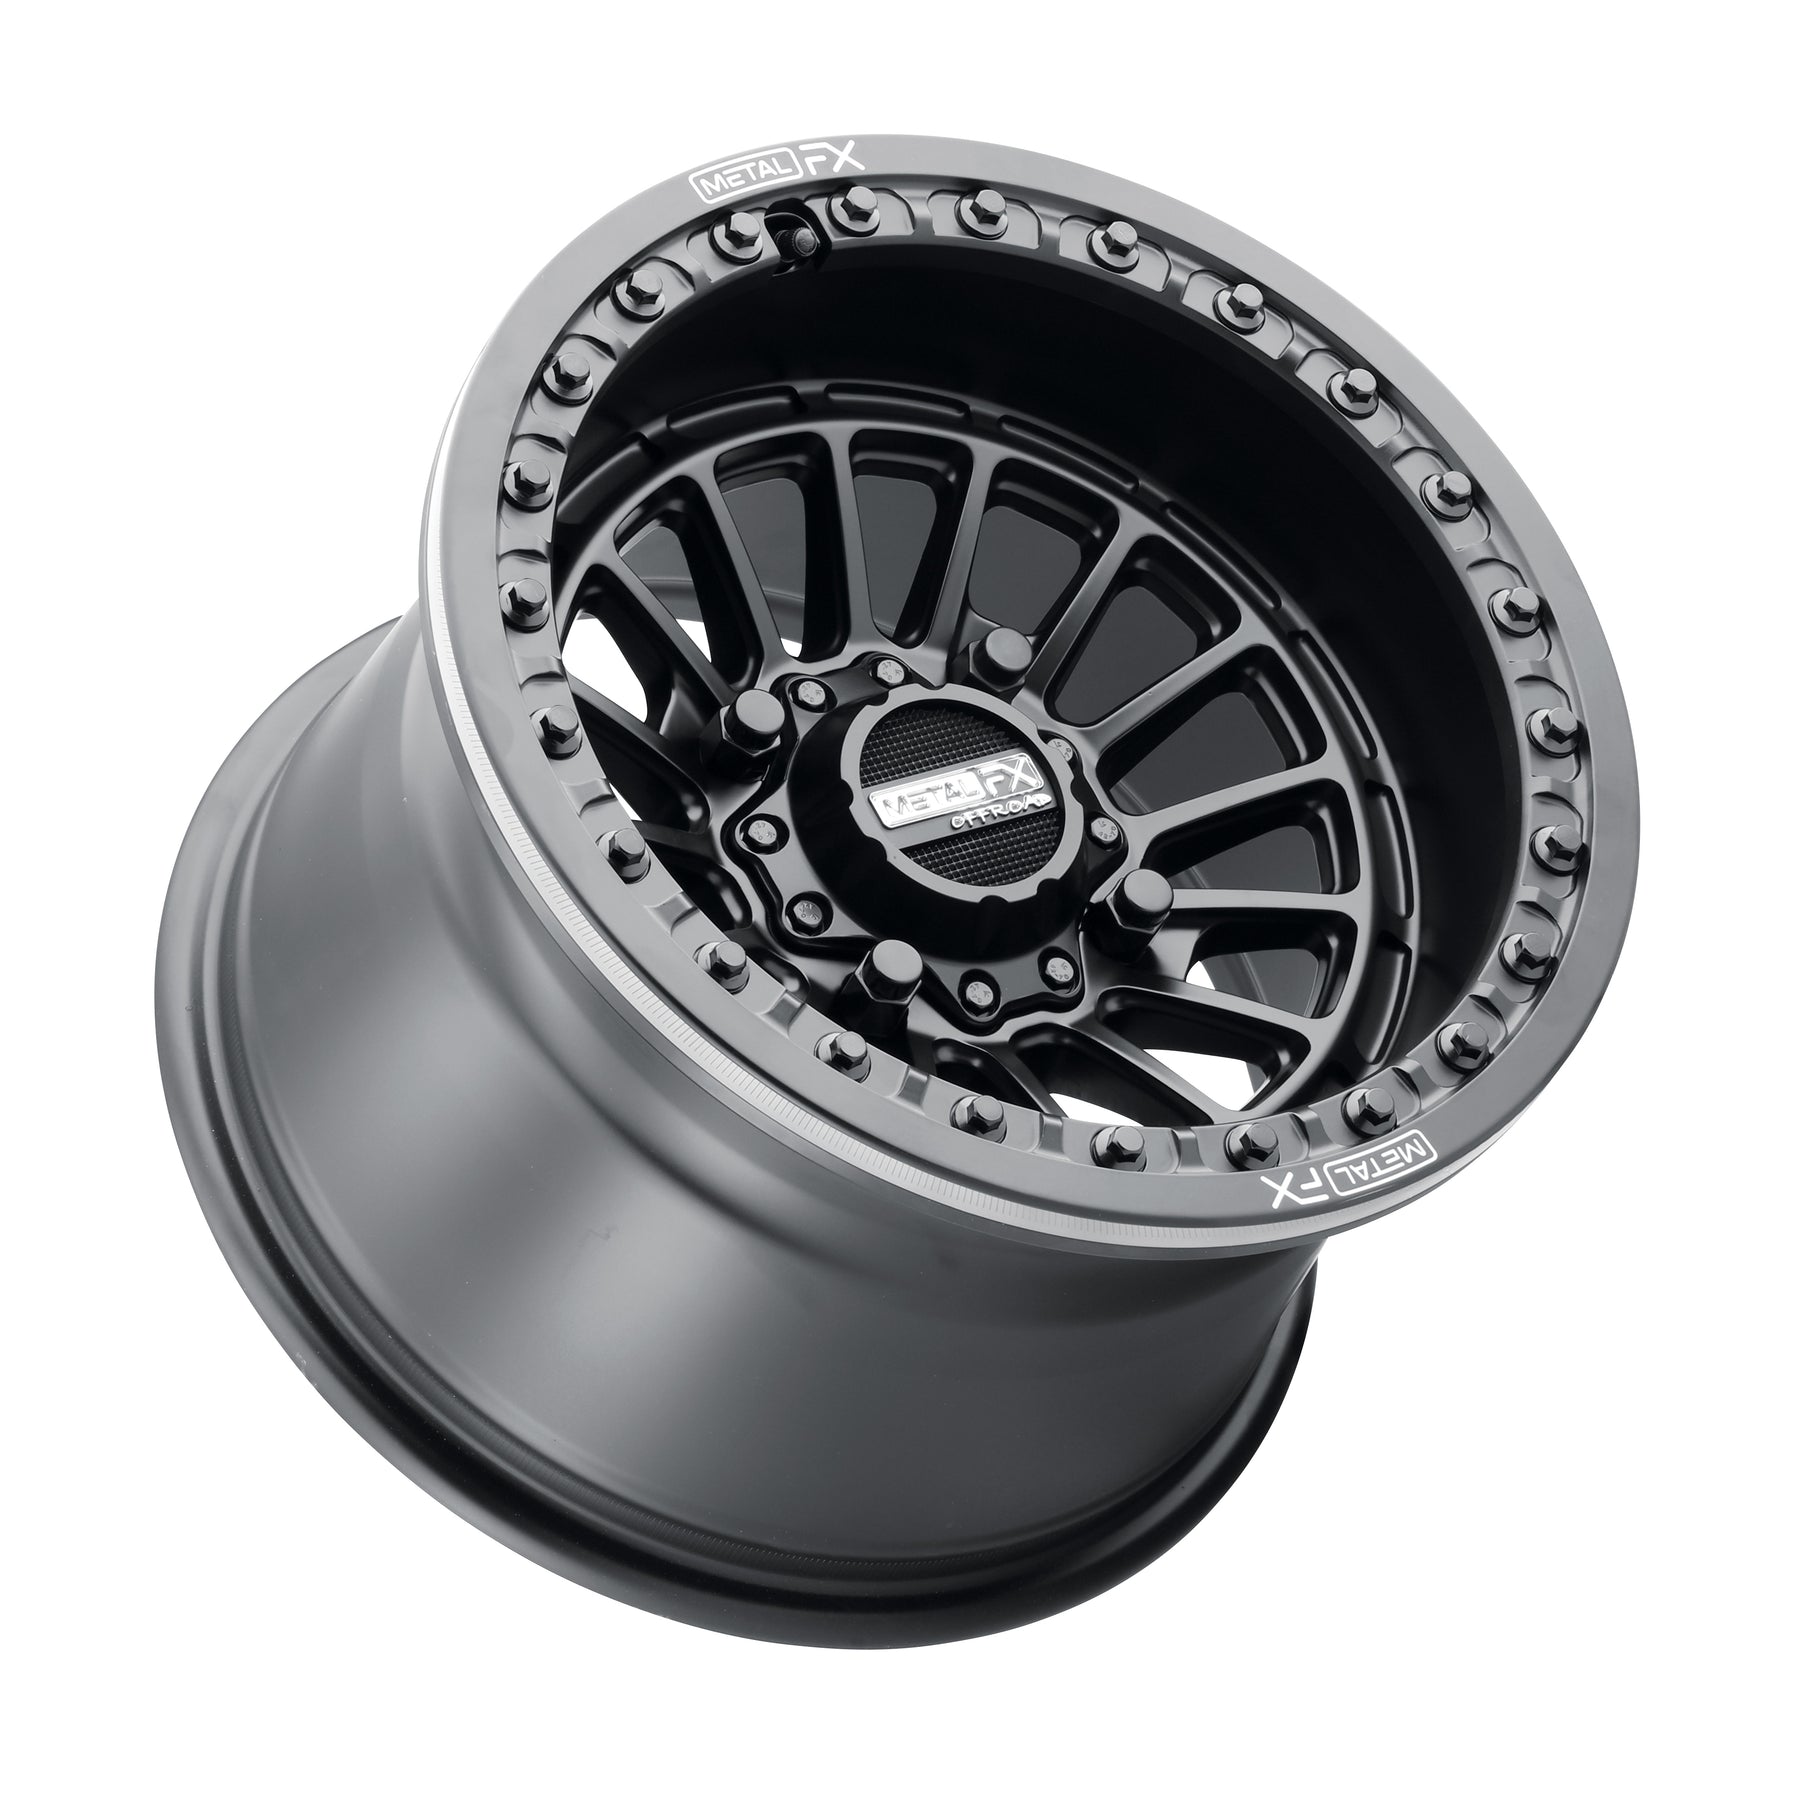 DELTA BEADLOCK WHEEL (SATIN BLACK)-Wheels-Metal FX Offroad-15x7 | 25mm | 4x136/4x137 | 78301 (Can-Am / Honda)-Black Market UTV